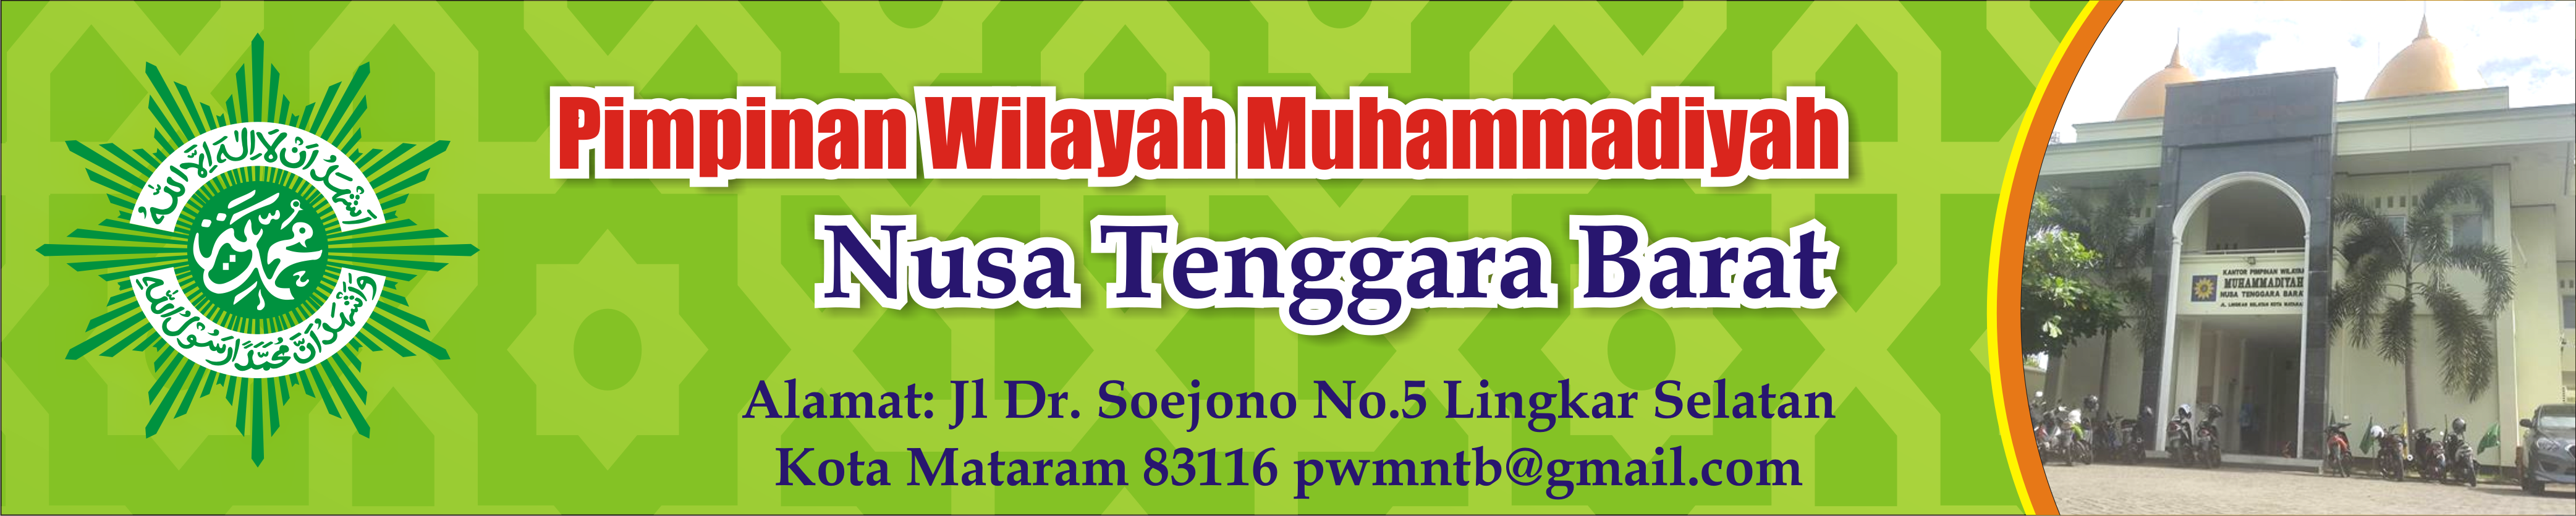 Majelis Pustaka dan Informasi Pimpinan Wilayah Muhammadiyah Nusa Tenggara Barat